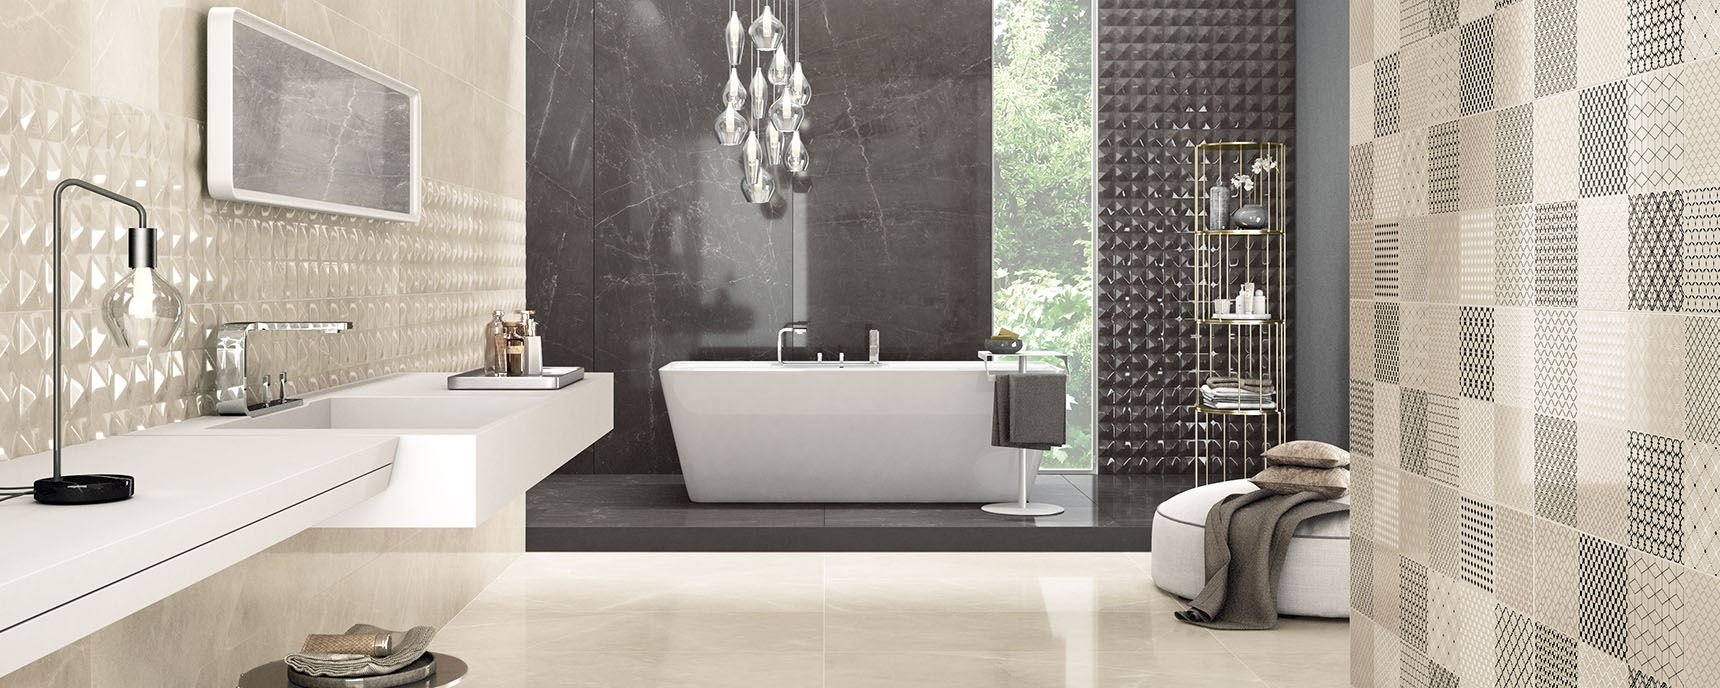 Trilogy: marble effect for an elegant bathroom